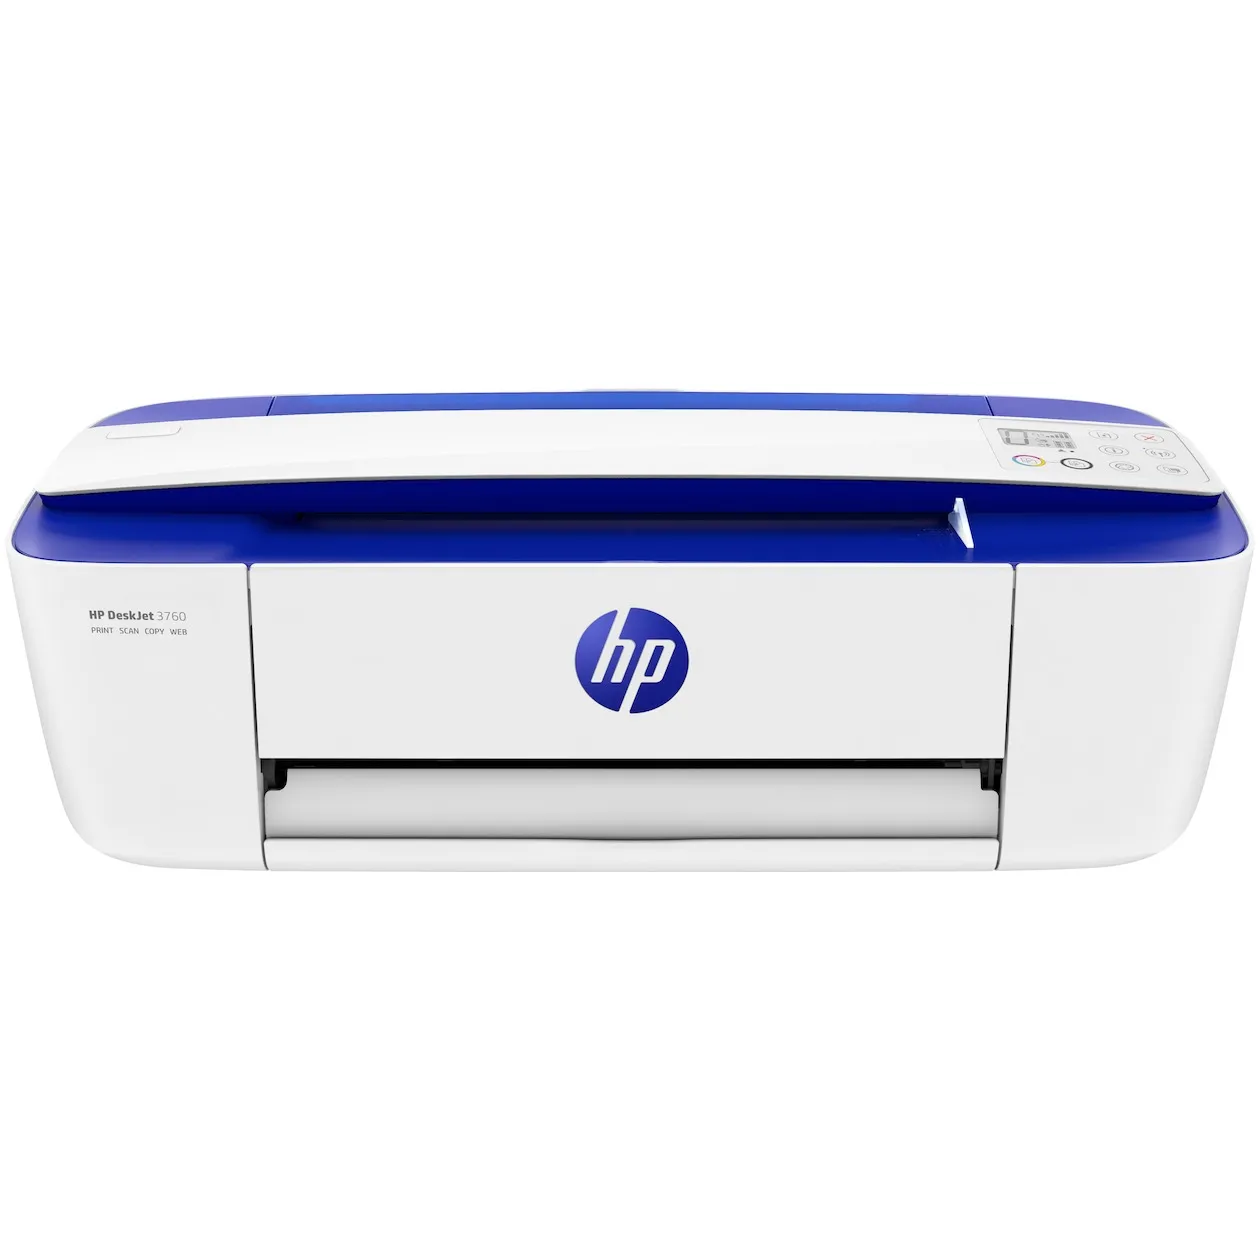 HP DeskJet 3760 Blauw